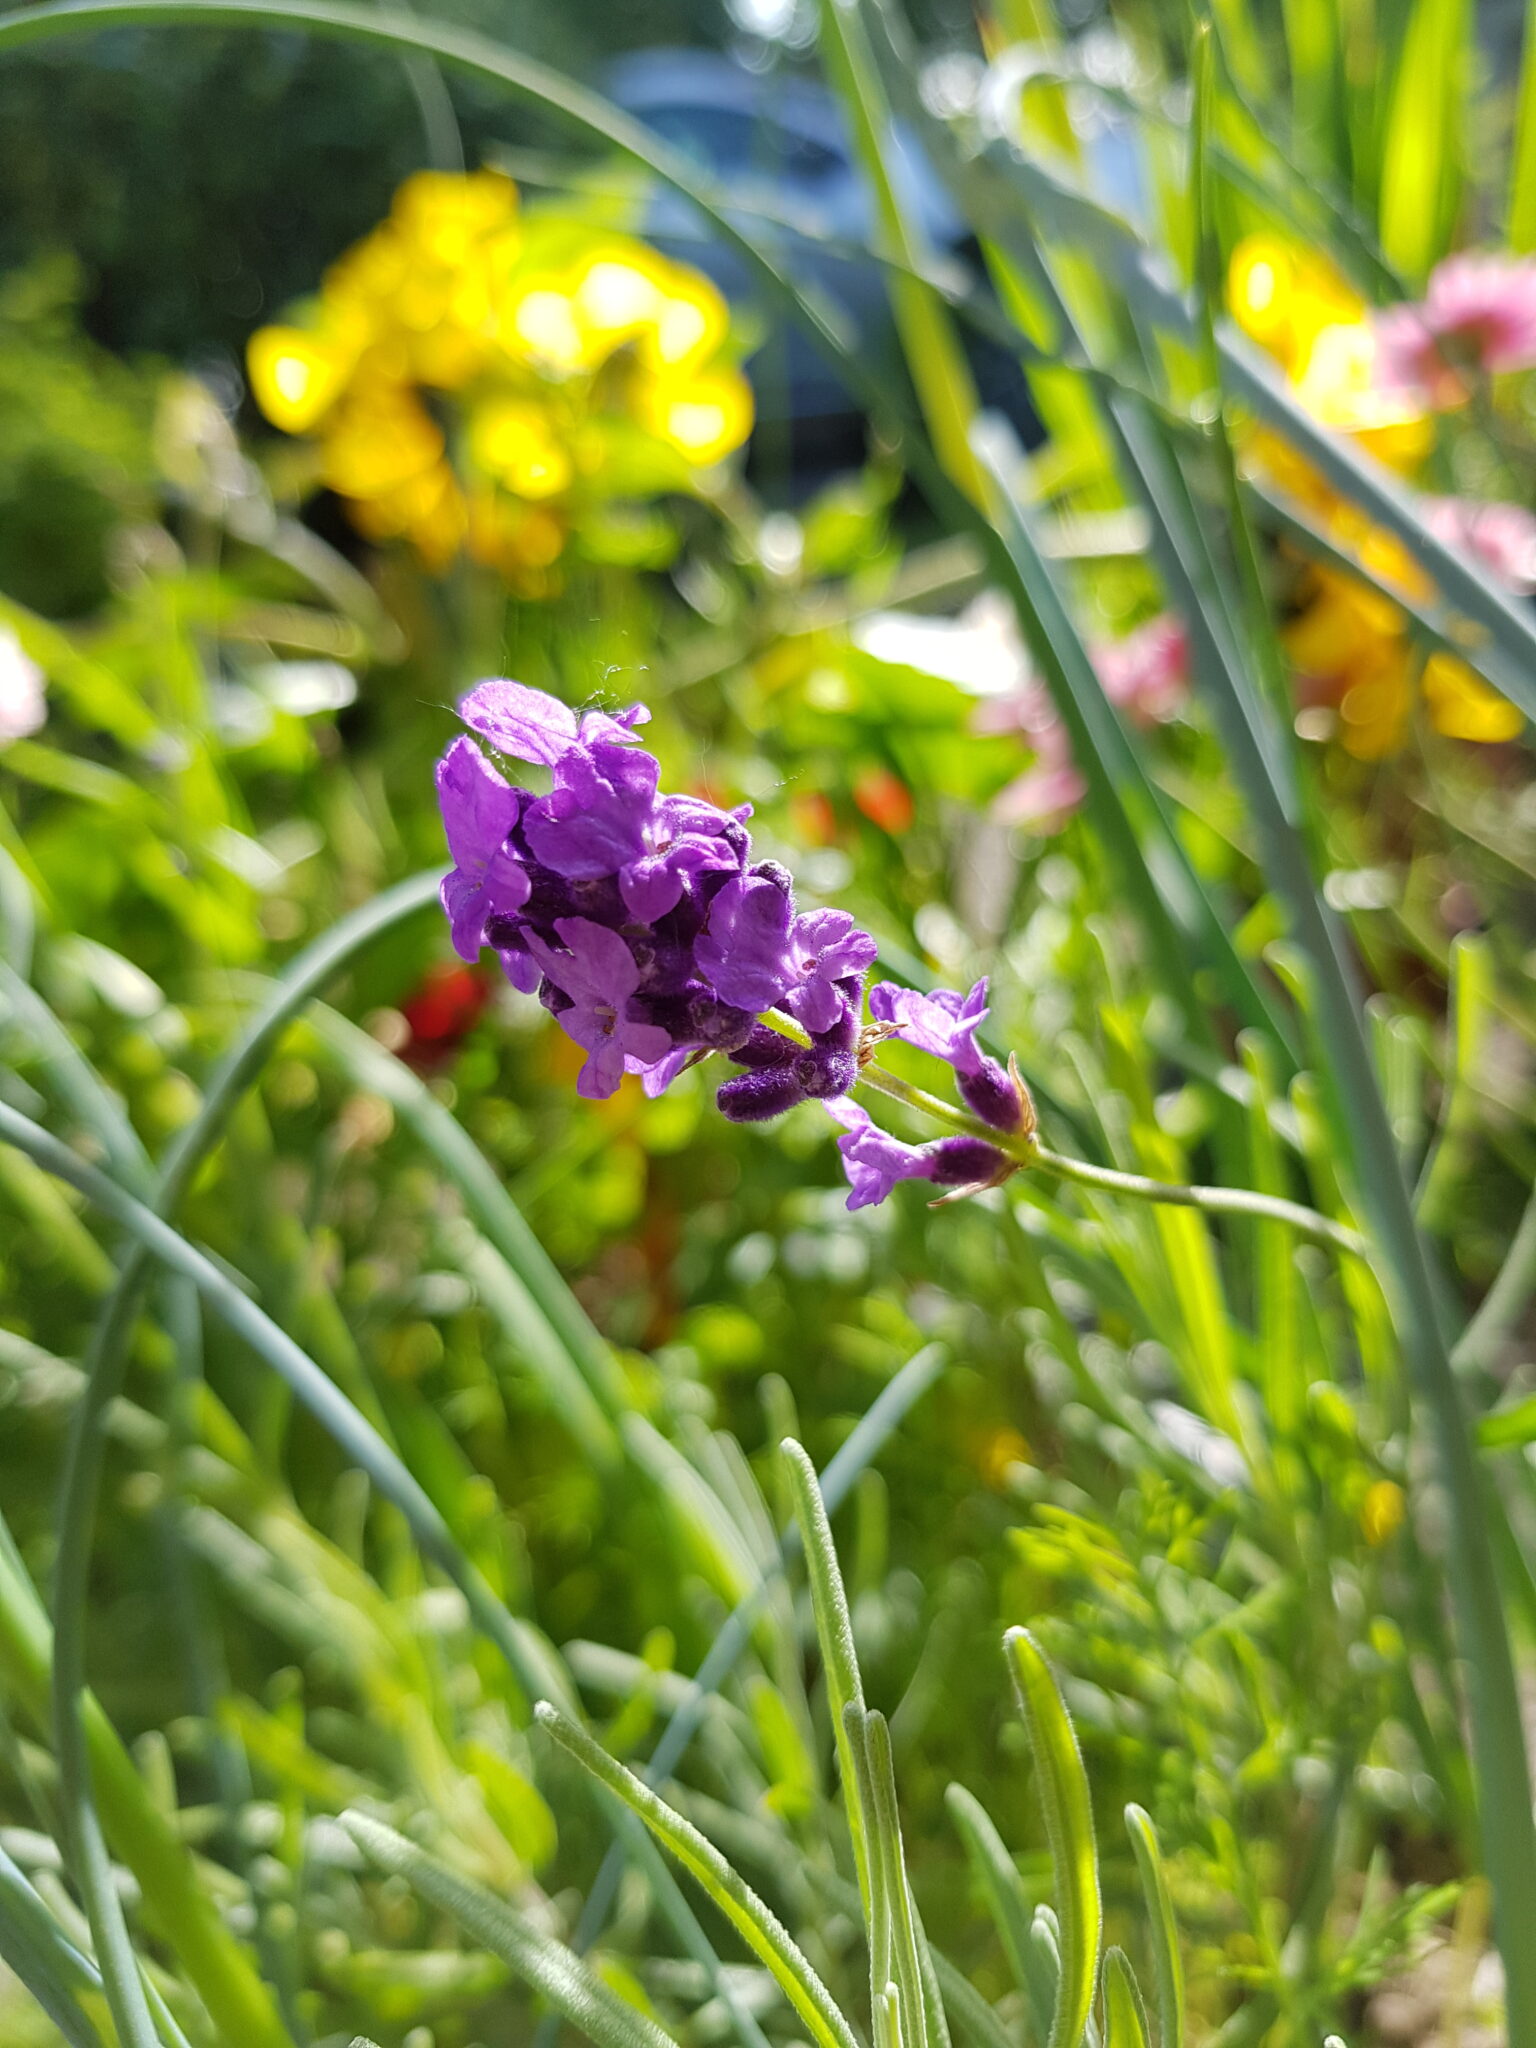 Lavendula angustifolia - Lavender